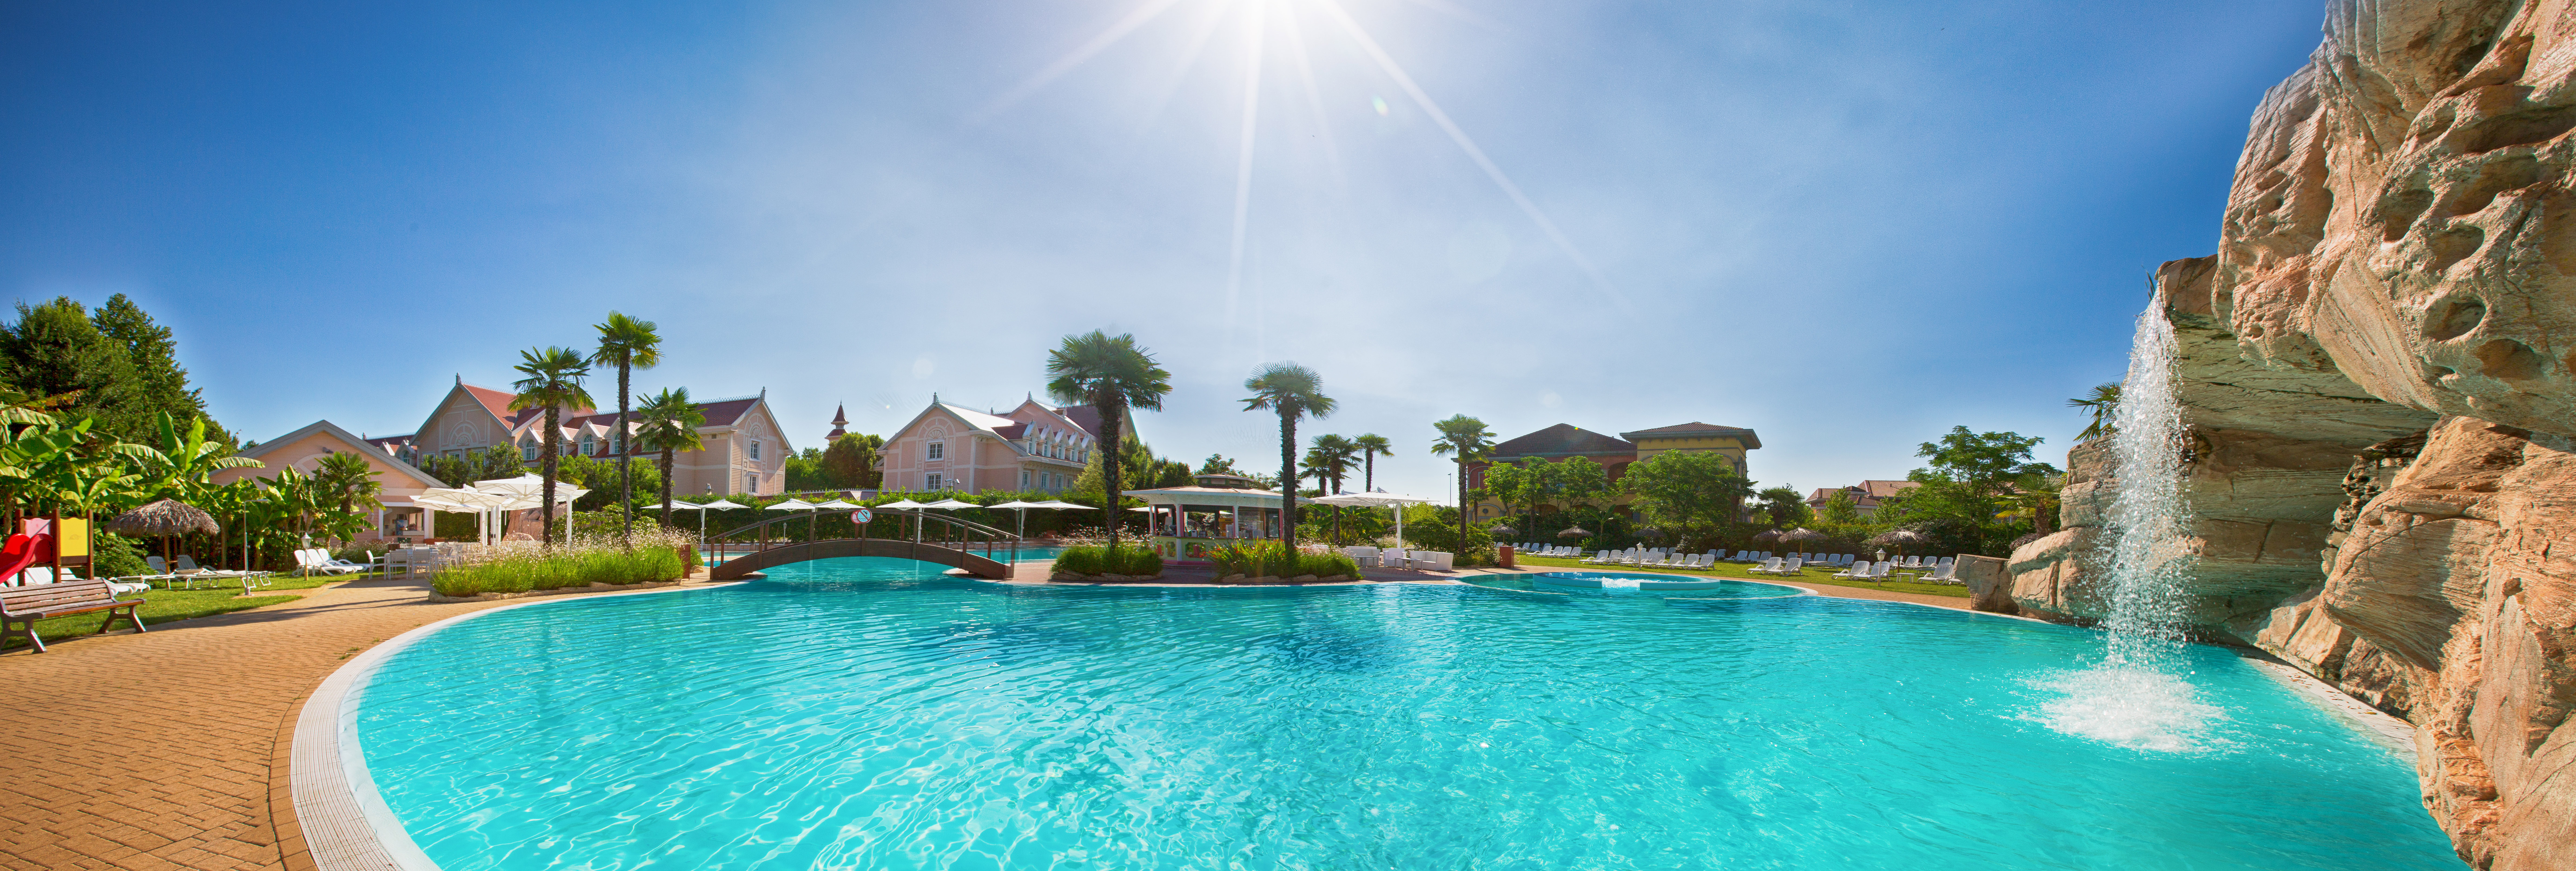 Gardaland Resort - Area Acquatica Blue Lagoon